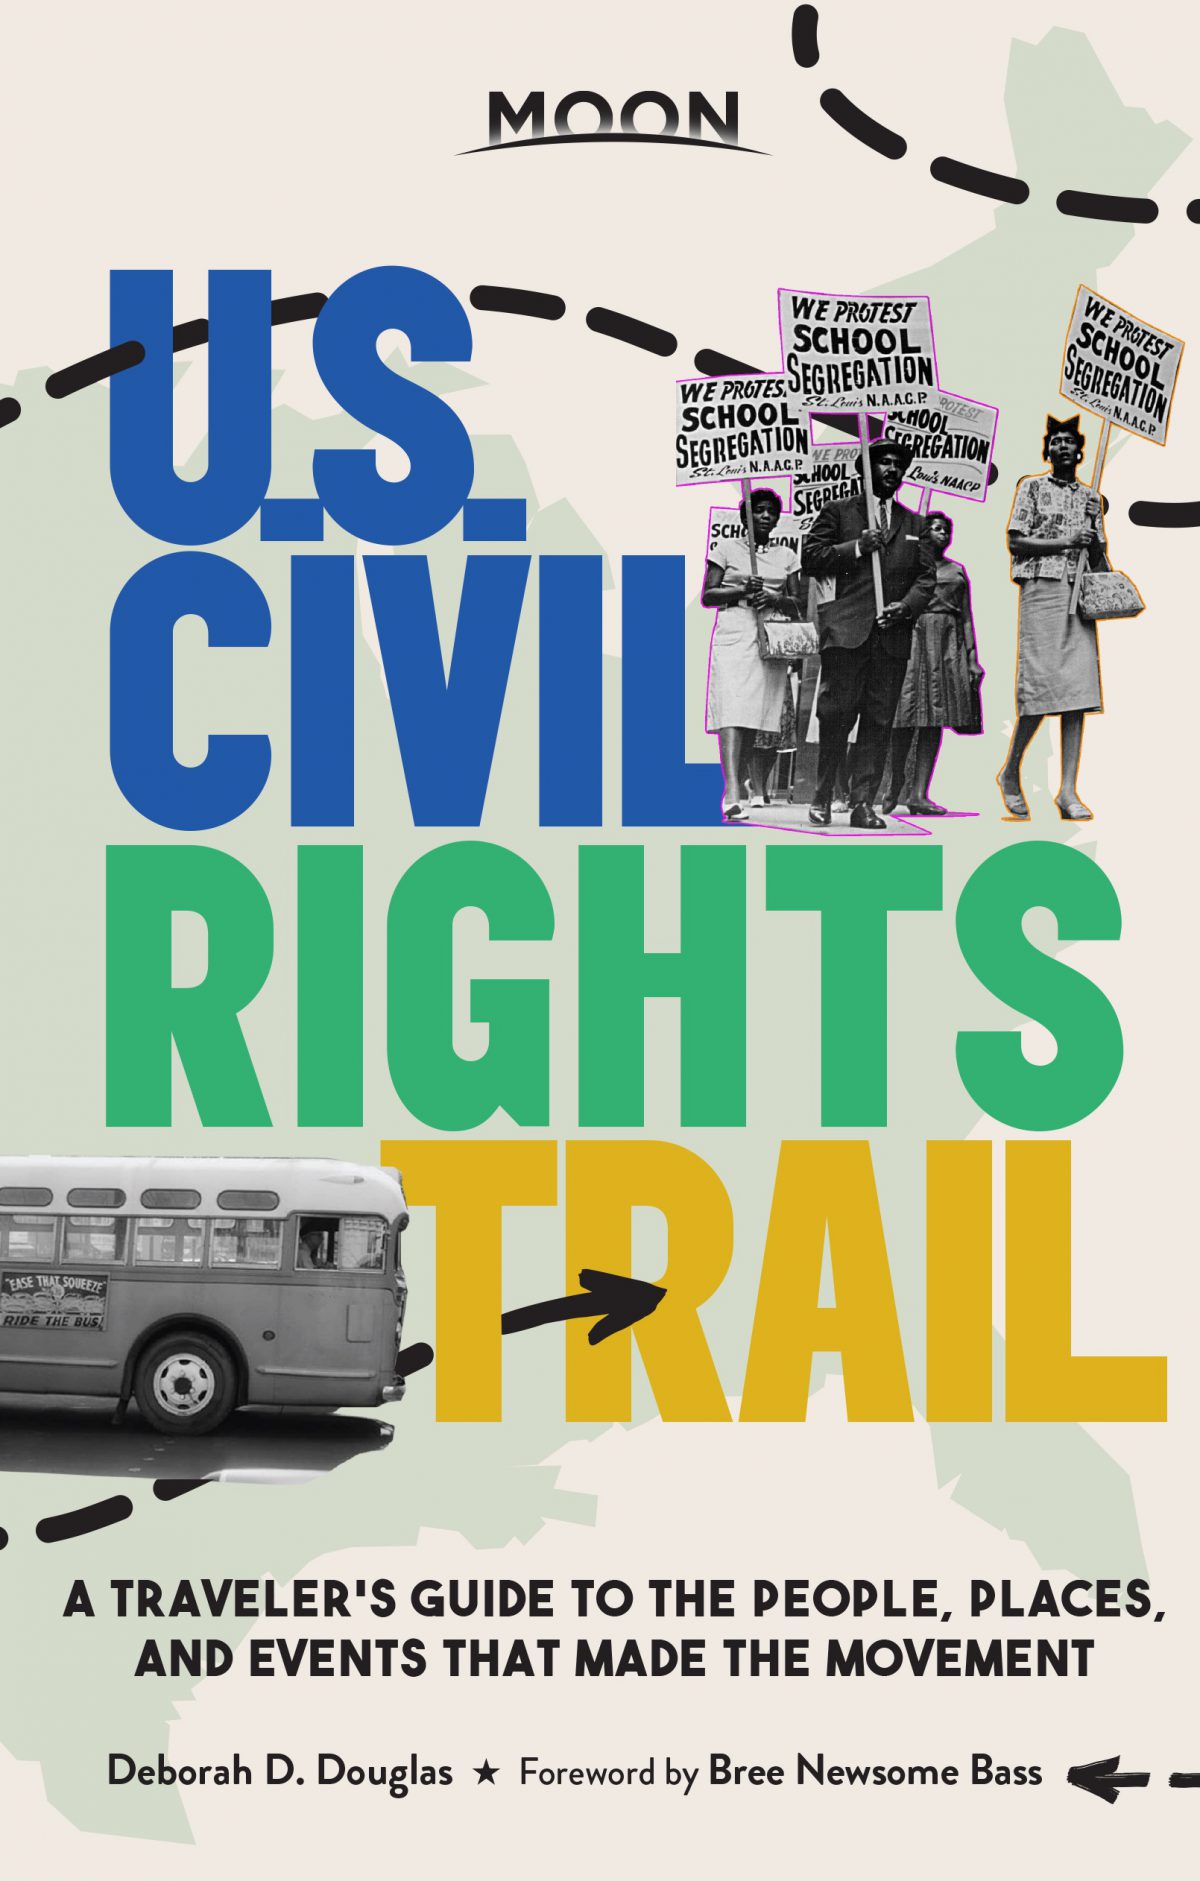 Cover of "Moon U.S. Civil Rights Trail" by Deborah D. Douglas.